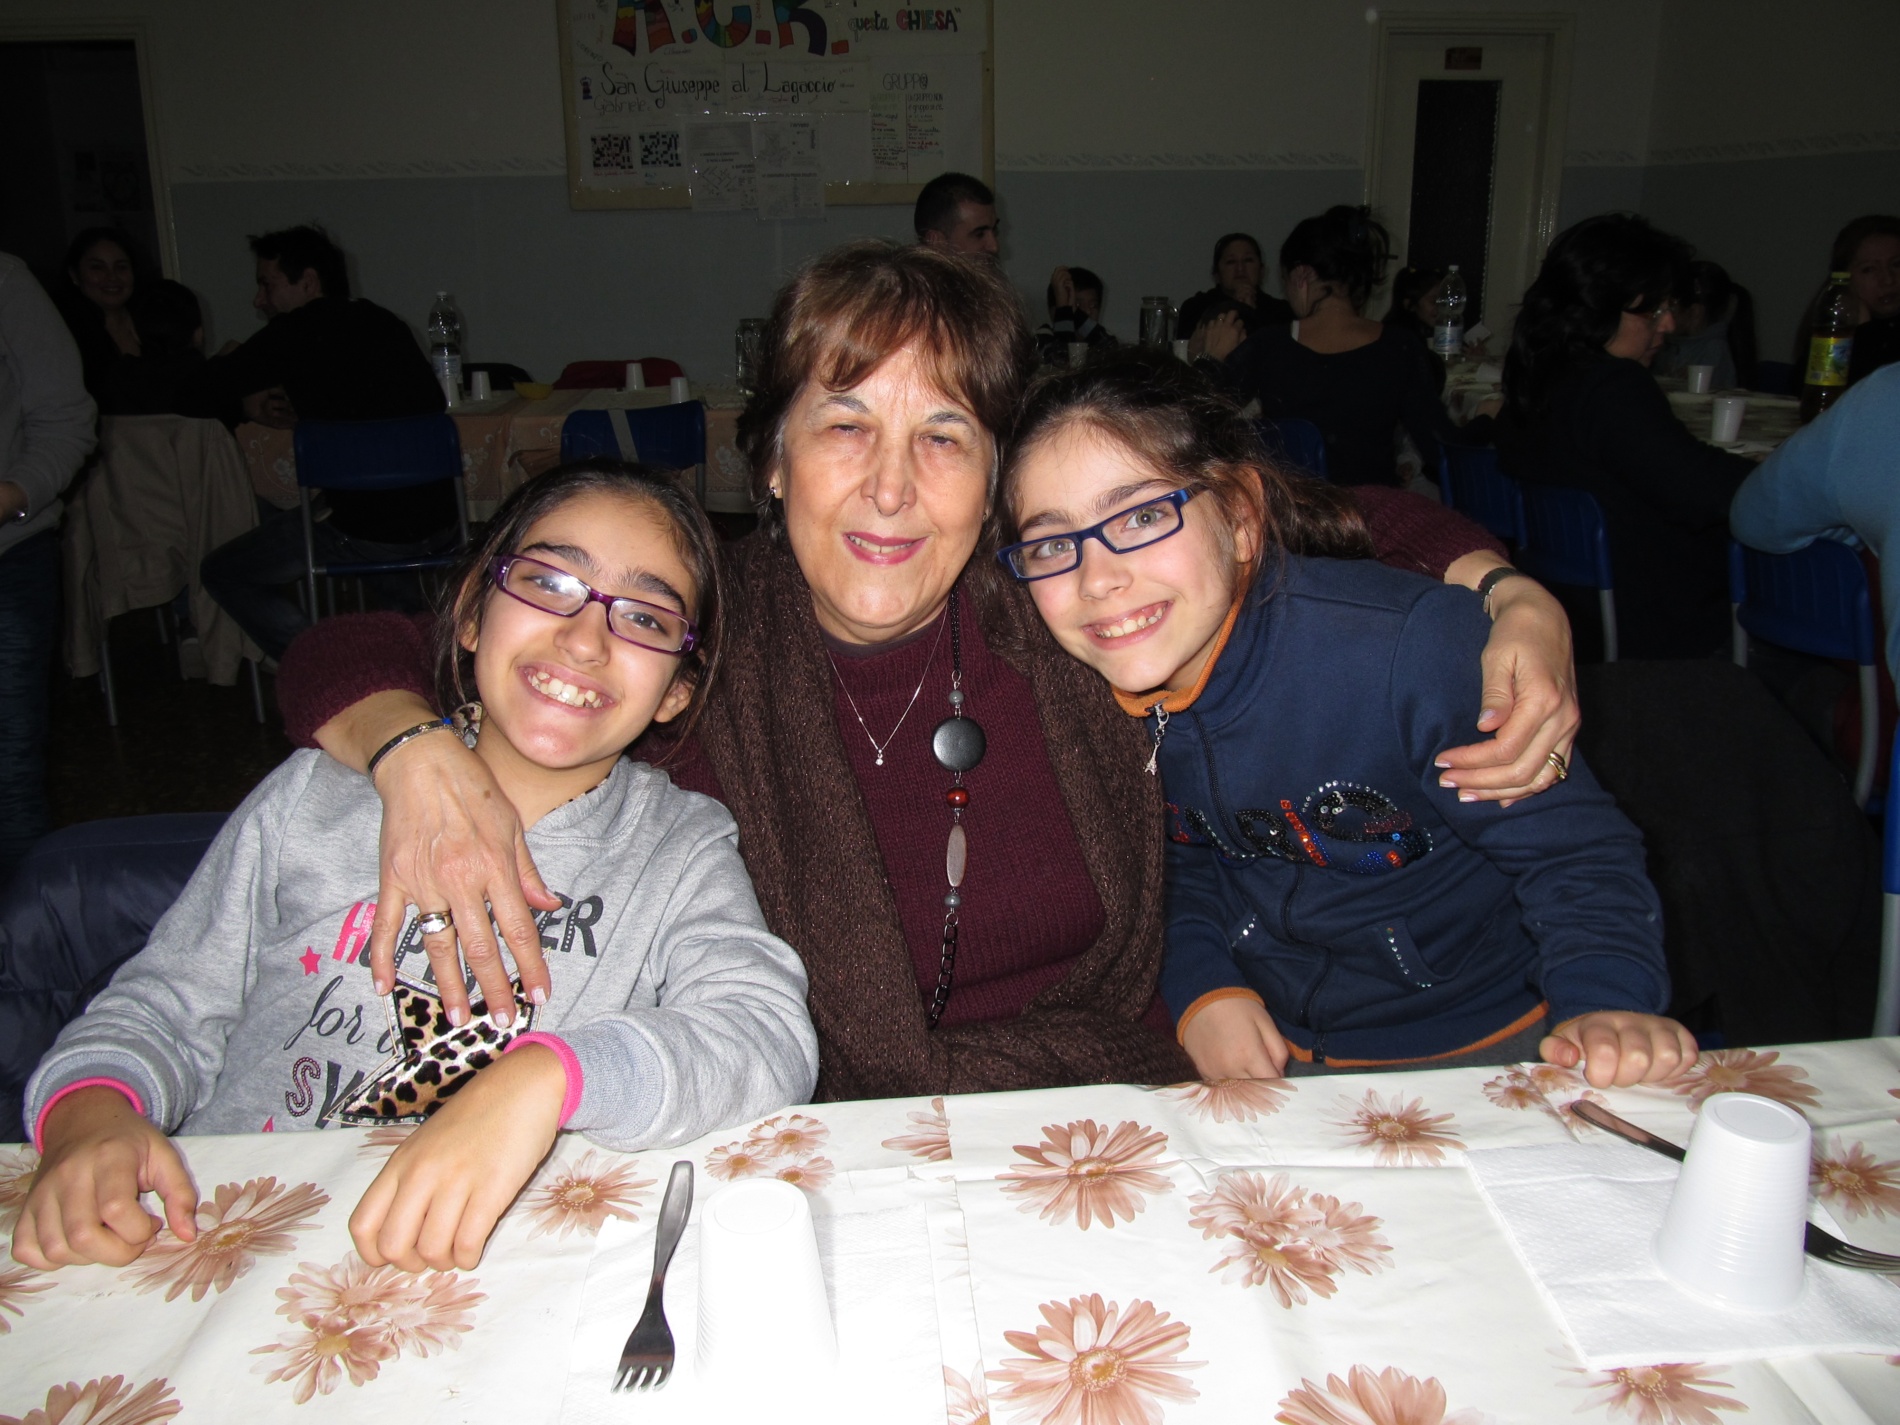 cena-famiglie-catechismo-2a-e-3a-elementare-2015-01-17-20-02-44